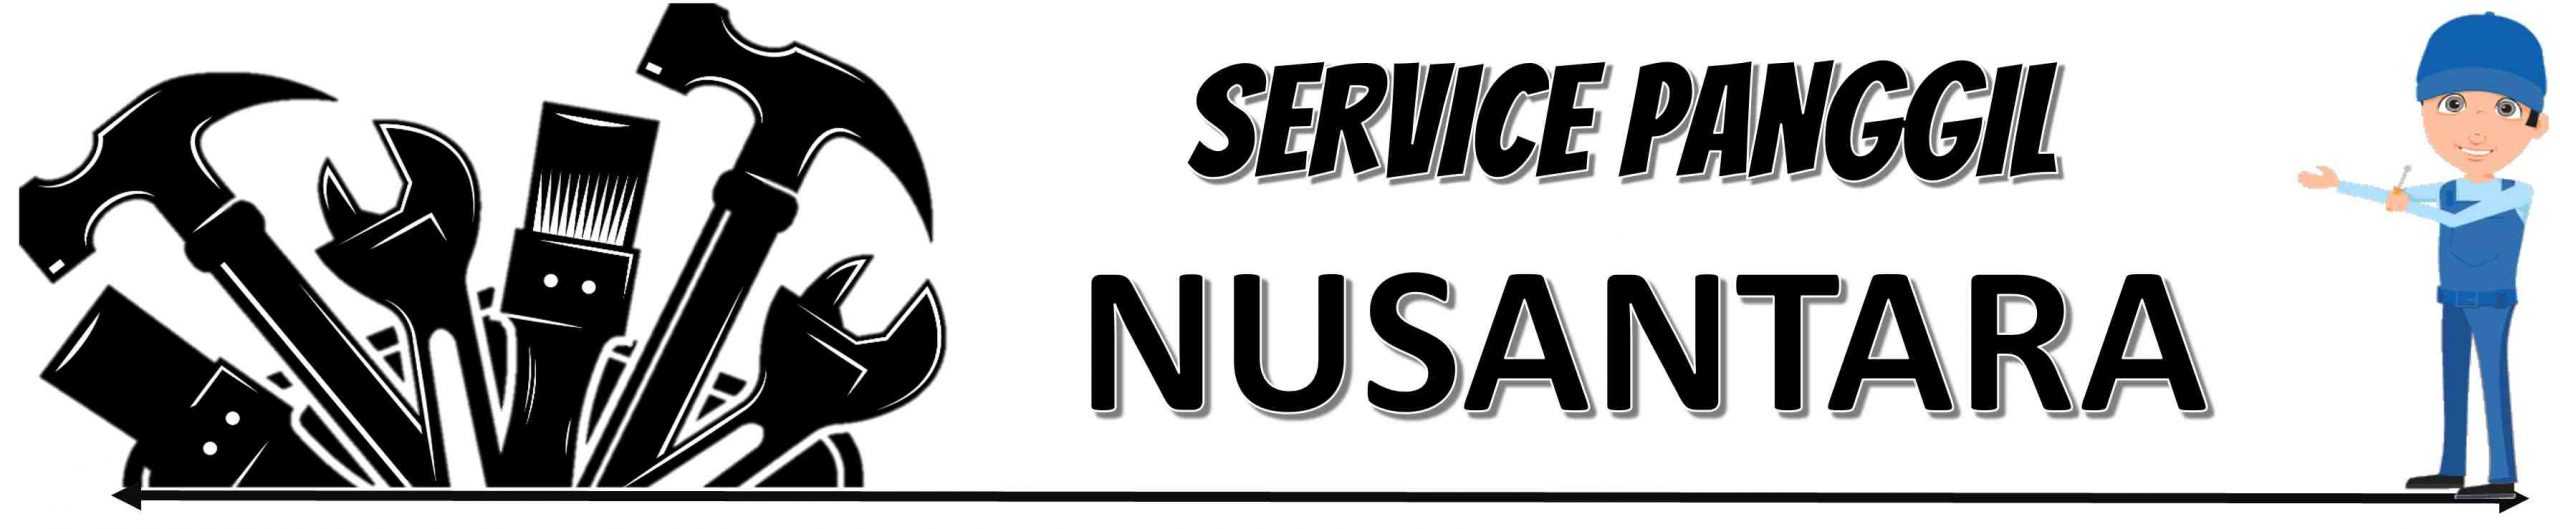 Service Panggil Nusantara